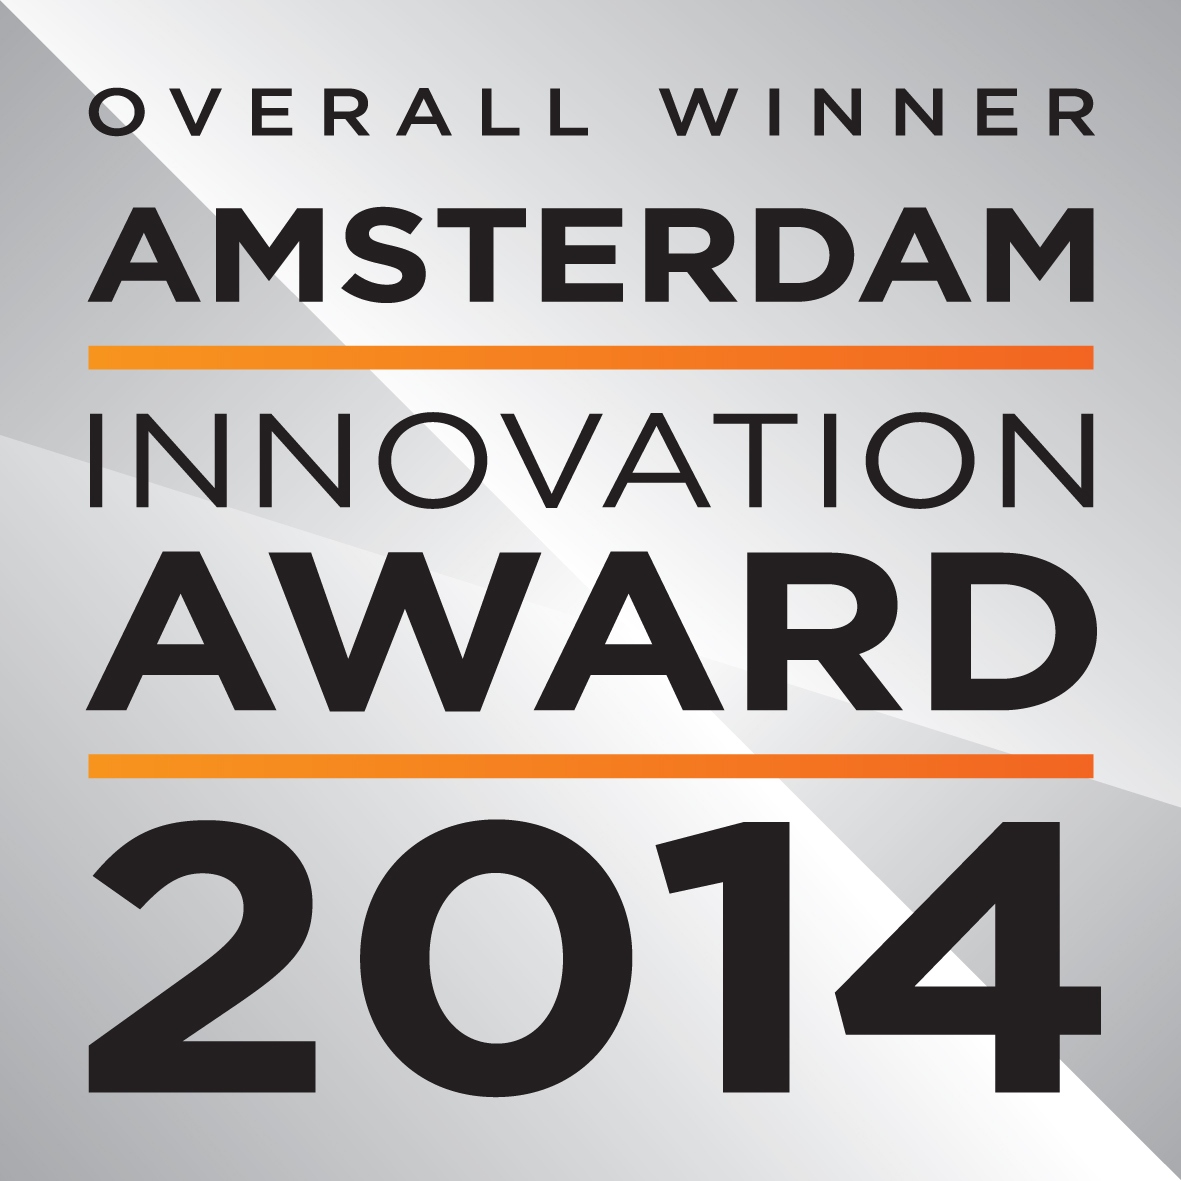 Overall winner - Amsterdam, Innovation Award- 2014